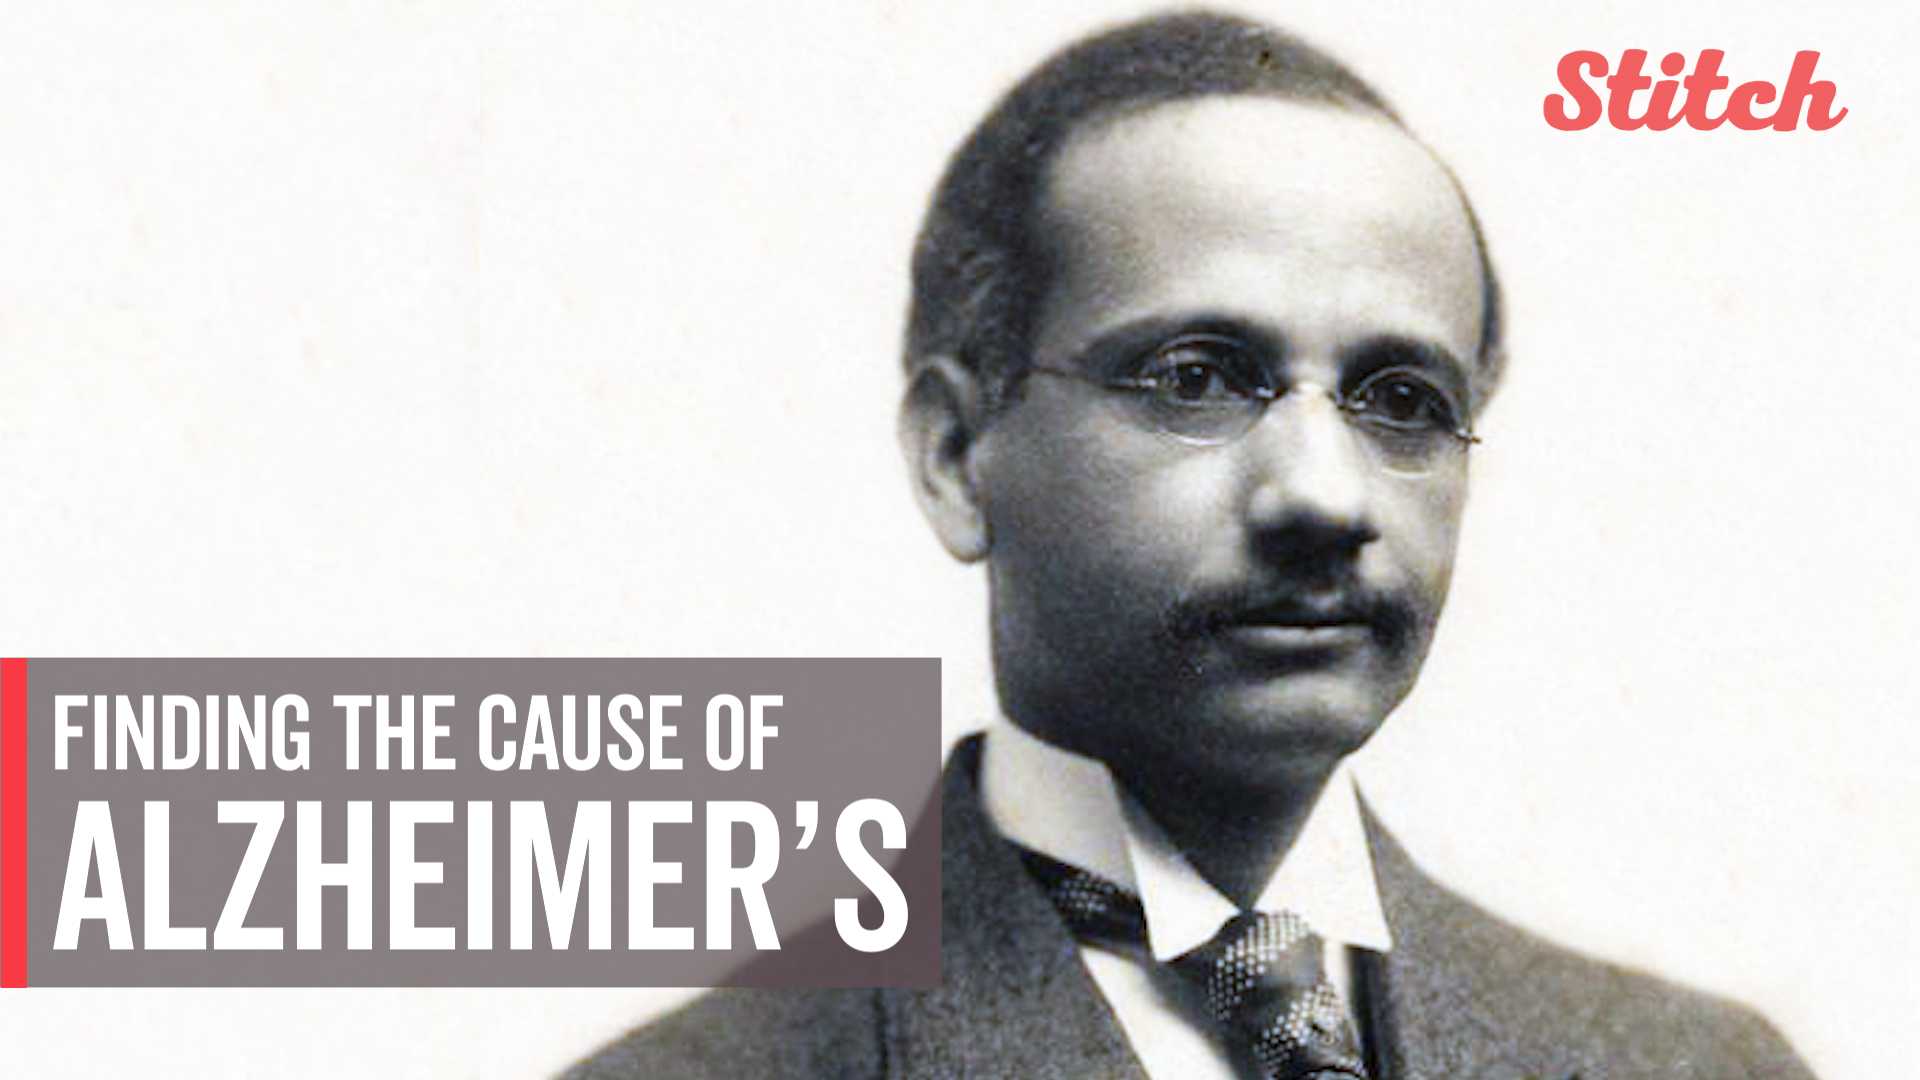 Dr. Solomon Carter Fuller discovered the cause of Alzheimer's disease